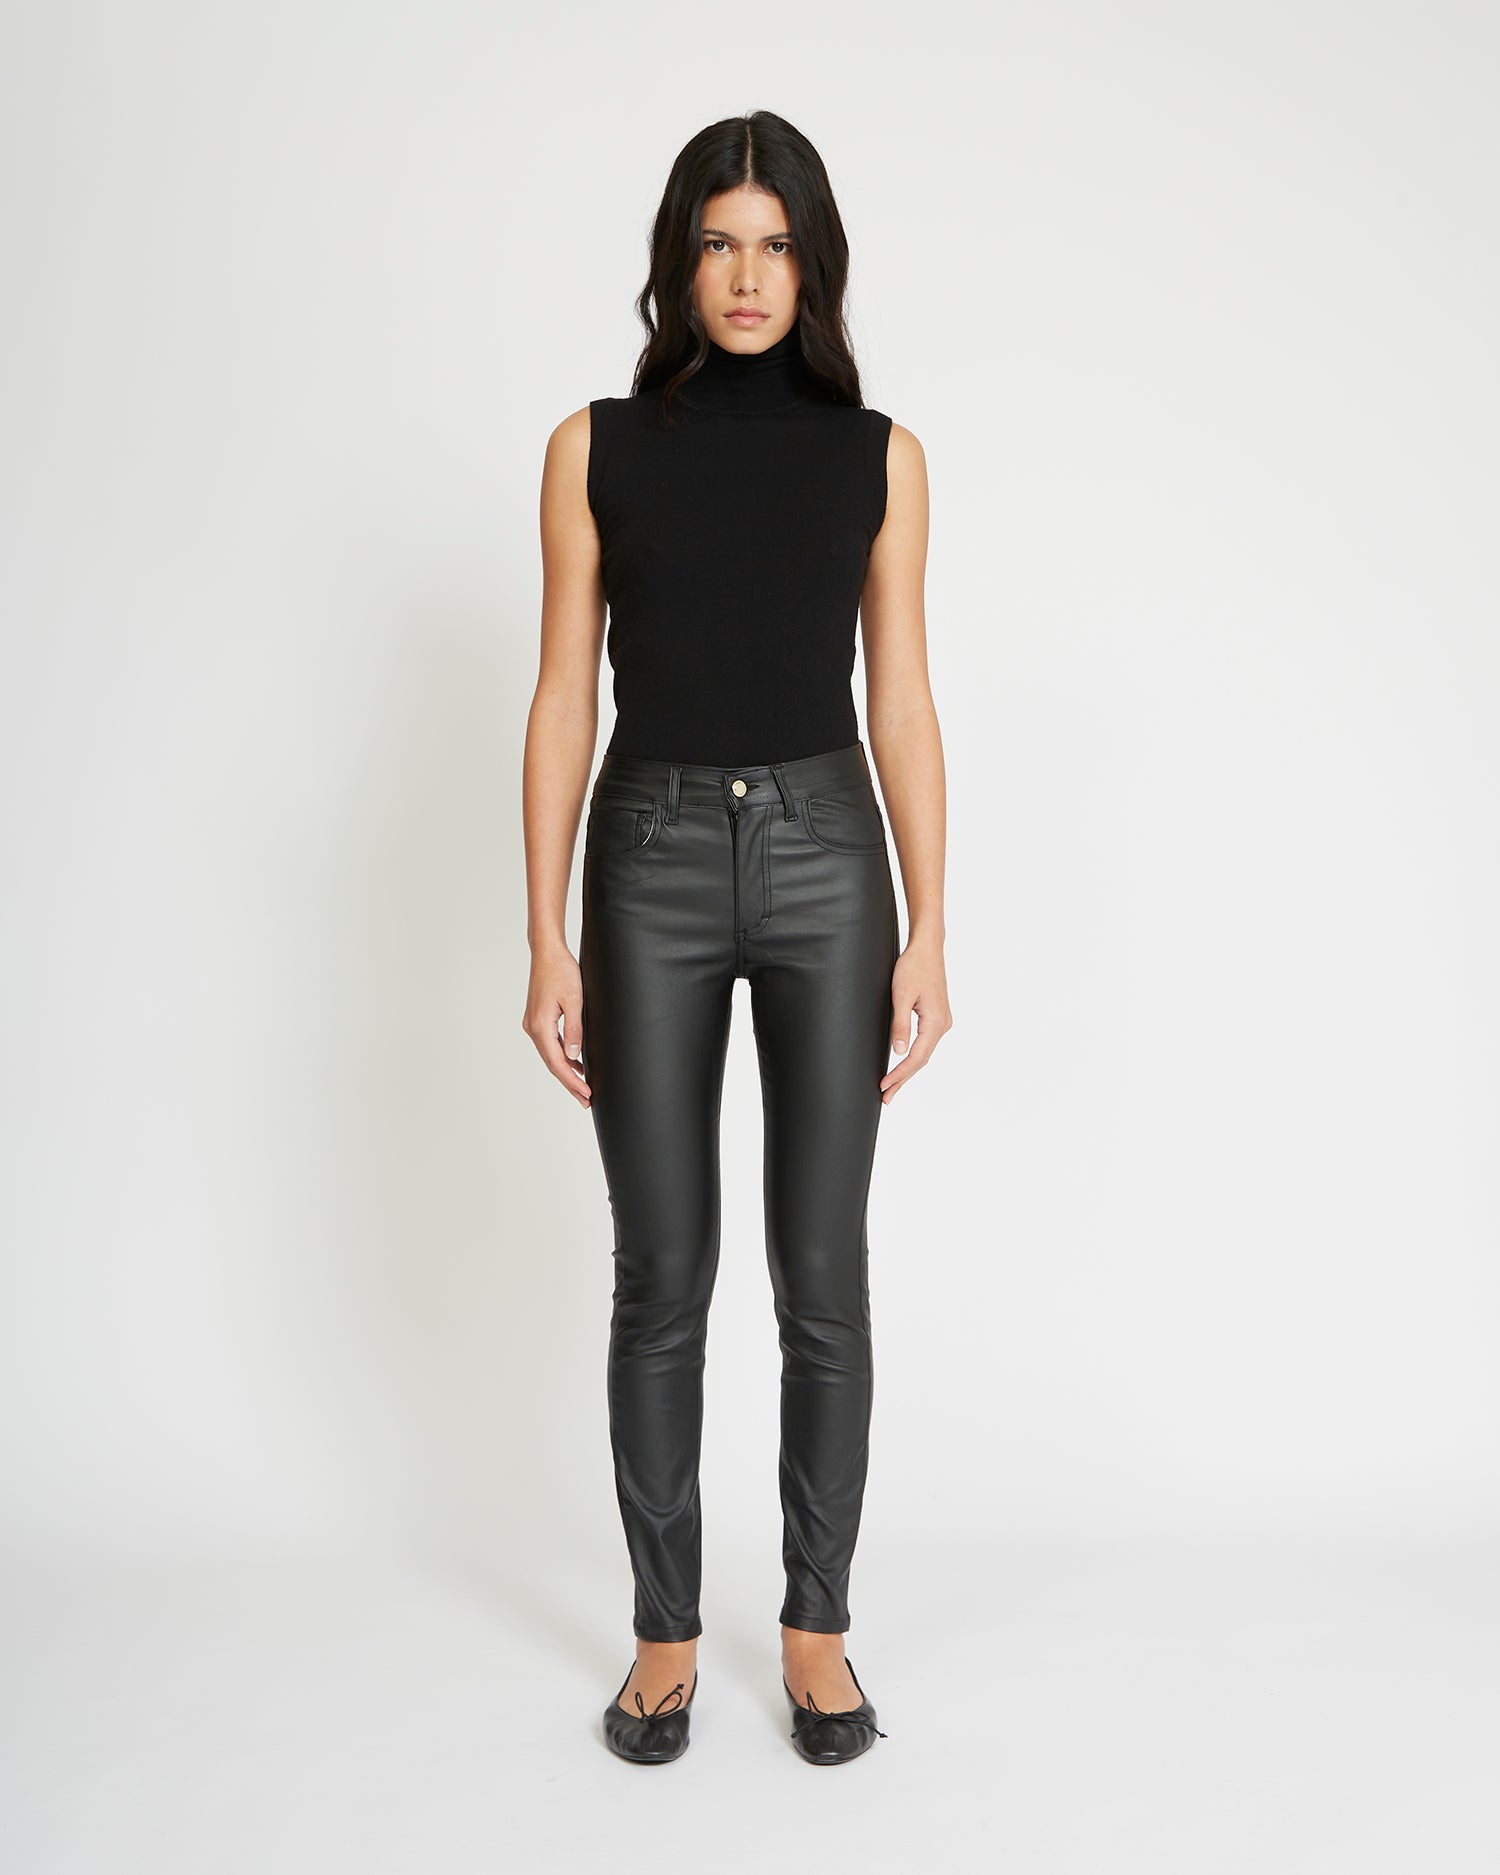 Urban Bliss Black LeatherLook Shaper Skinny Jeans  New Look